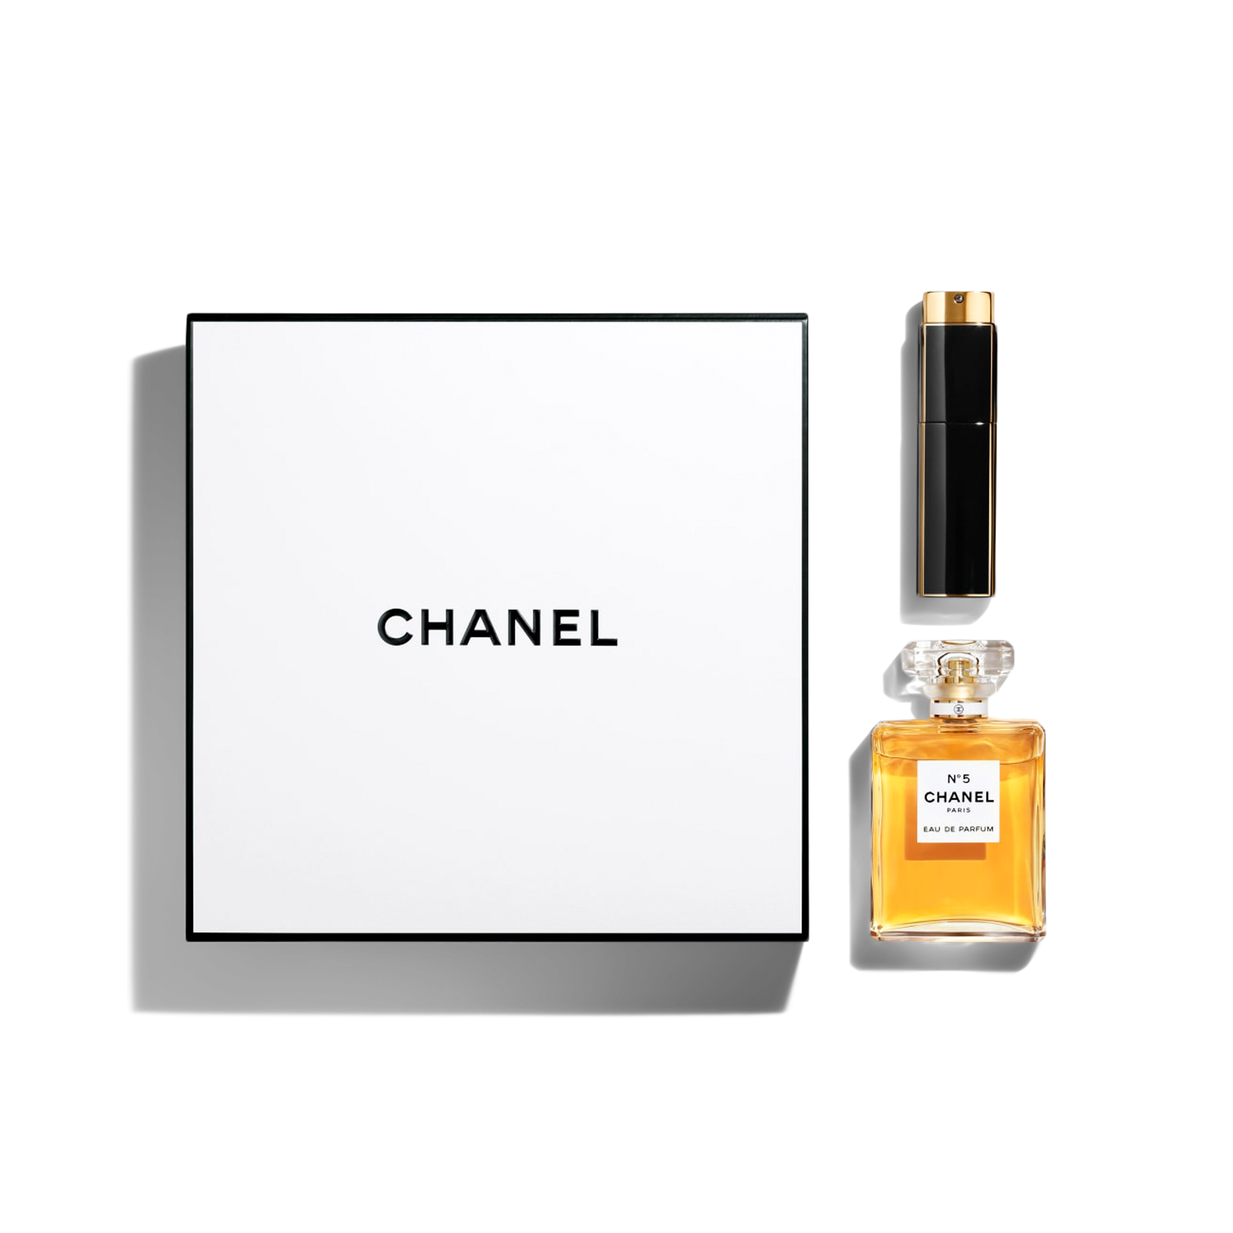 perfume for women chanel 5 eau